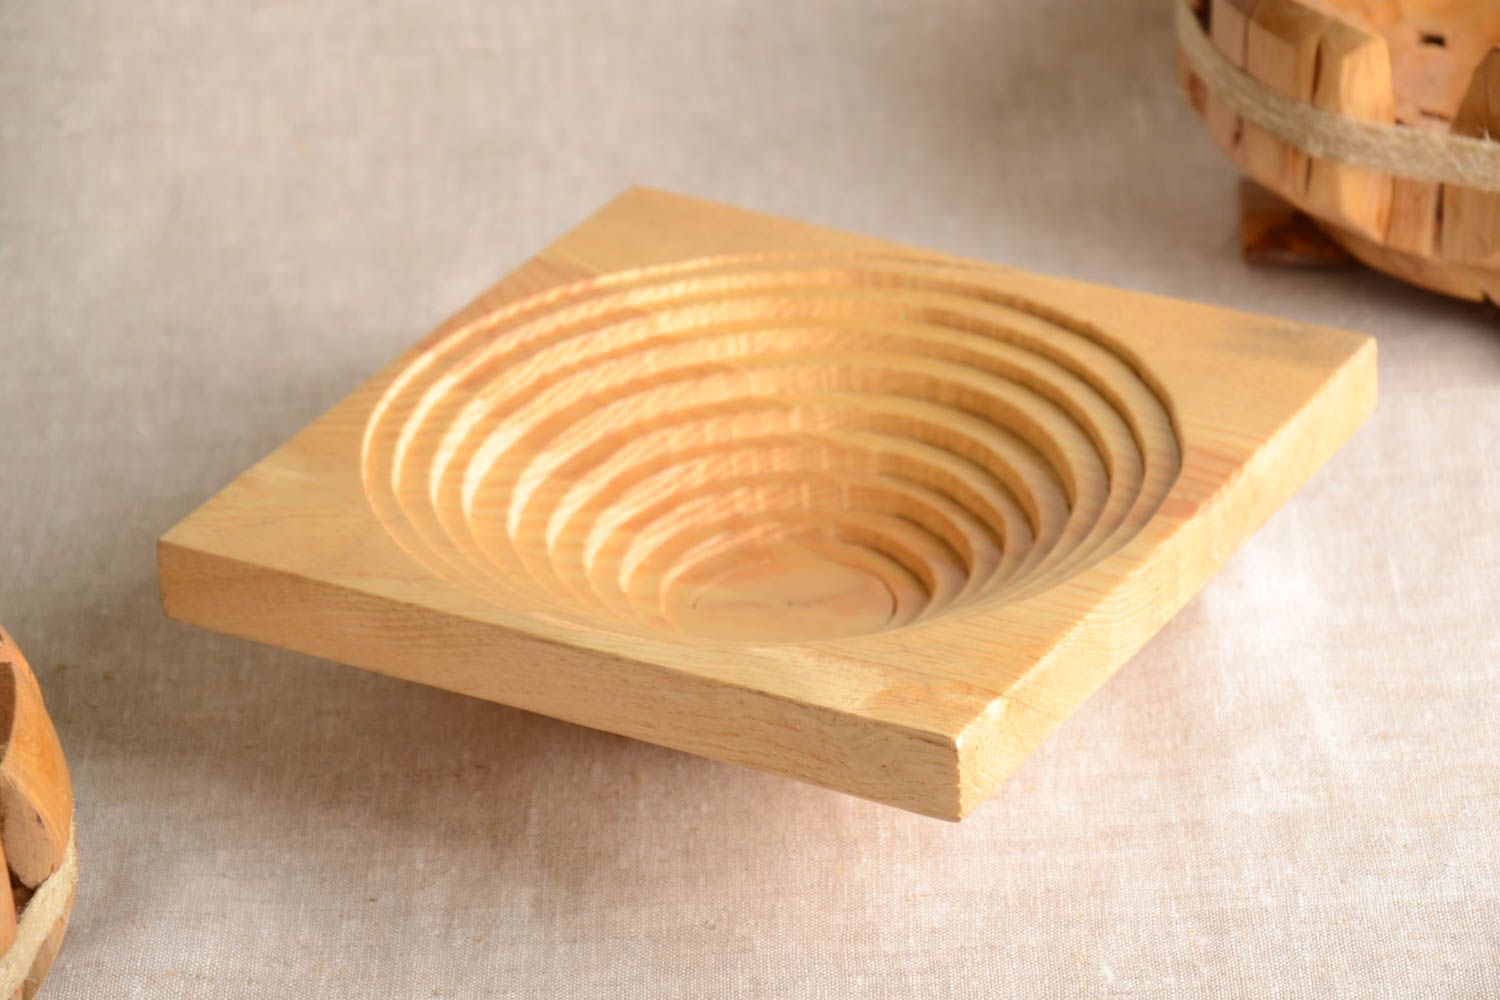 Handmade breadbin wooden bread bin wooden dishes kitchen decor gift ideas photo 1